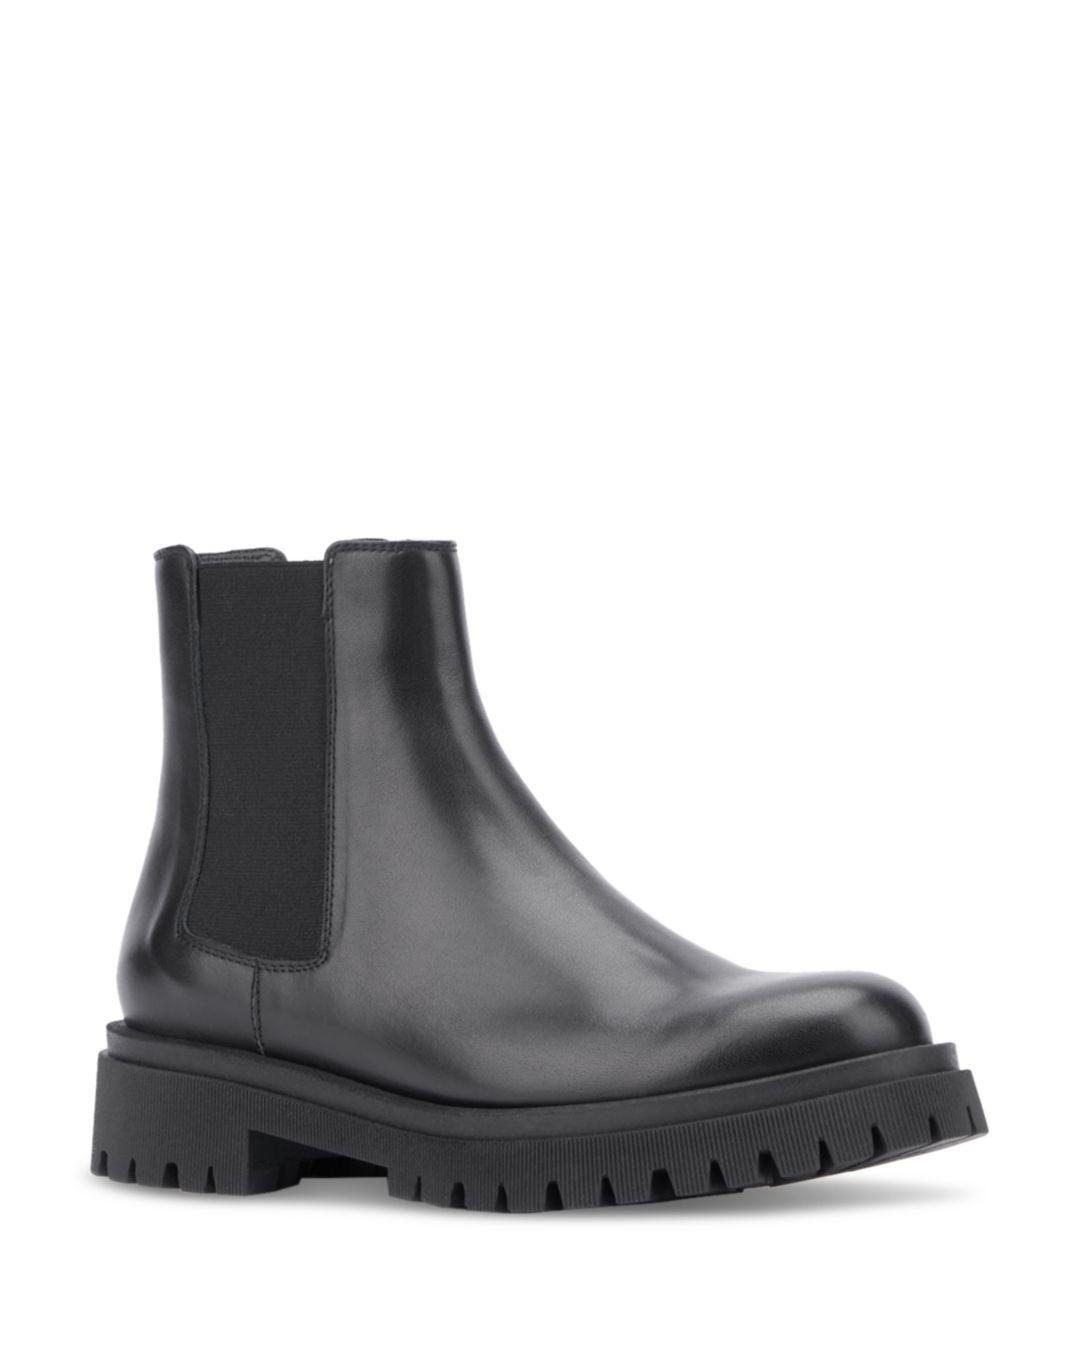 Aquatalia Olessa Pull On Chelsea Boots in Black | Lyst